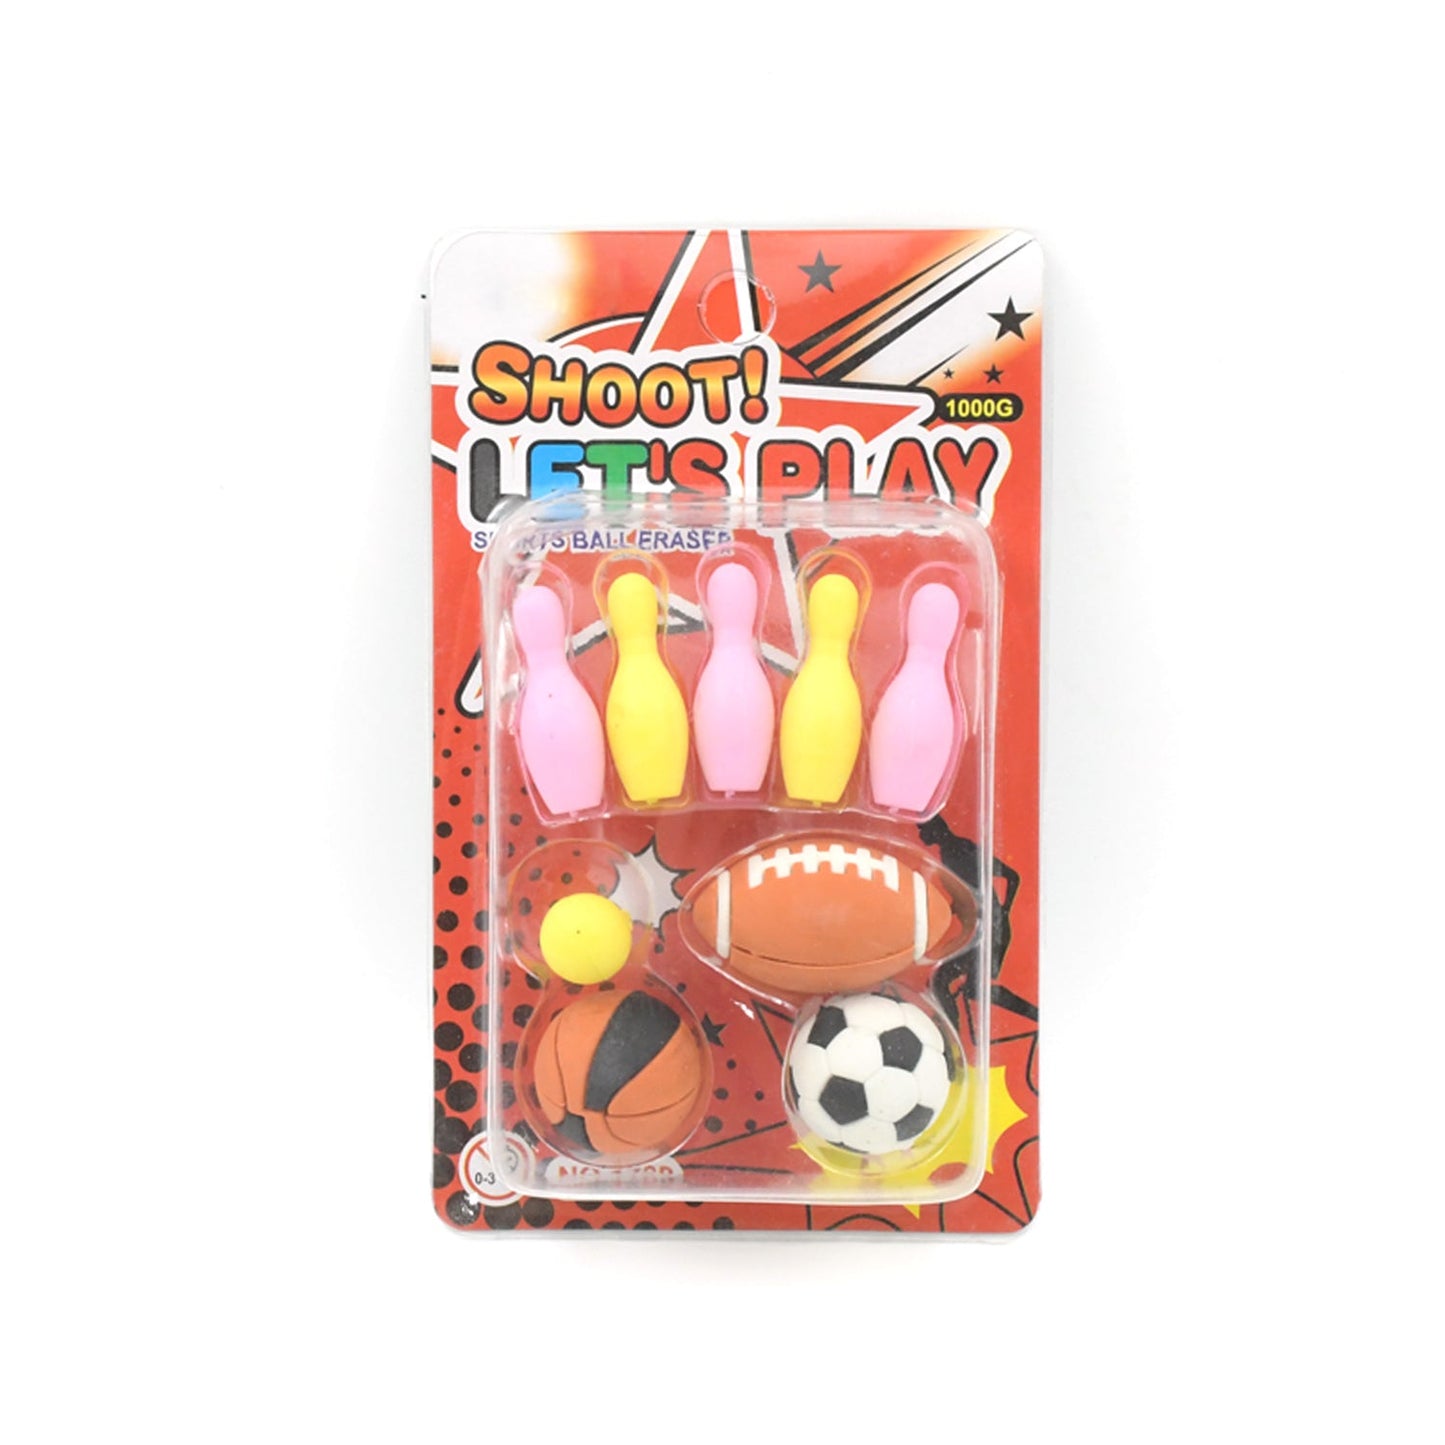 Stationary Kit Fancy & Stylish Colorful Erasers, Mini Eraser Creative Cute Novelty Eraser for Children Different Designs Eraser Set for Return Gift, Birthday Party, School Prize, Football & Icecream Set Eraser (9 pc & 5 Pc Set) - deal99.in